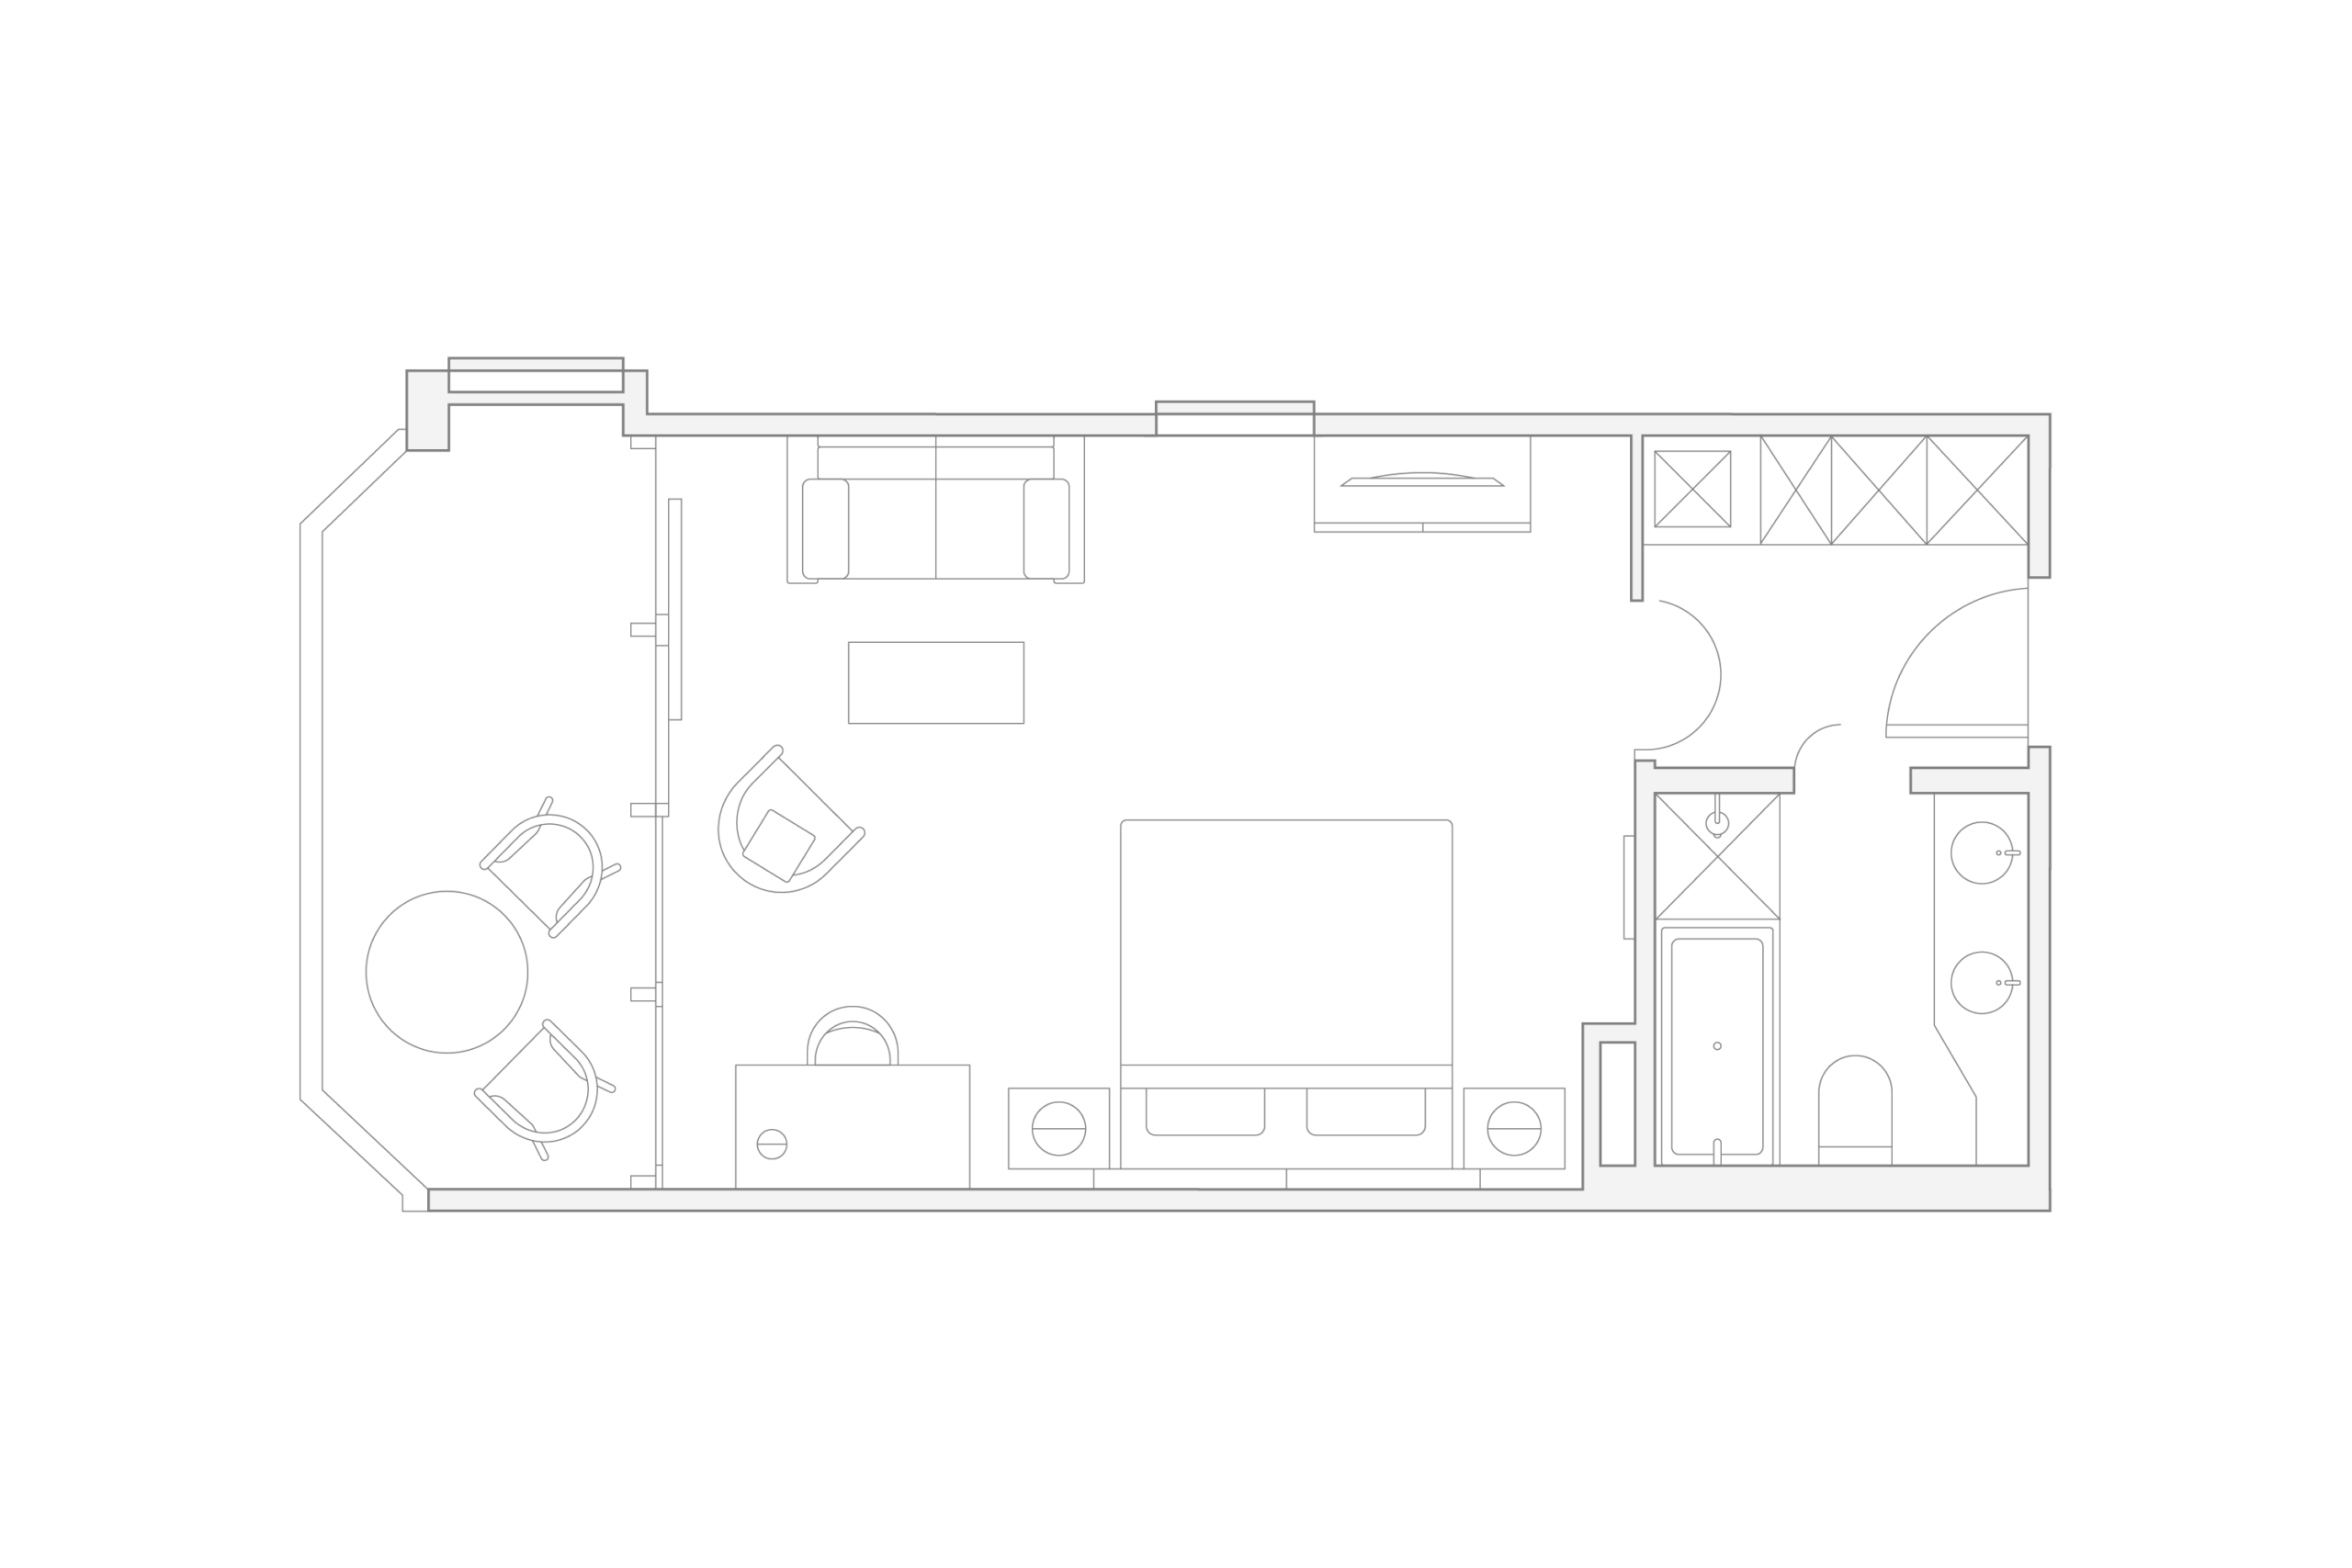 illustrated floorplan of the chalet room